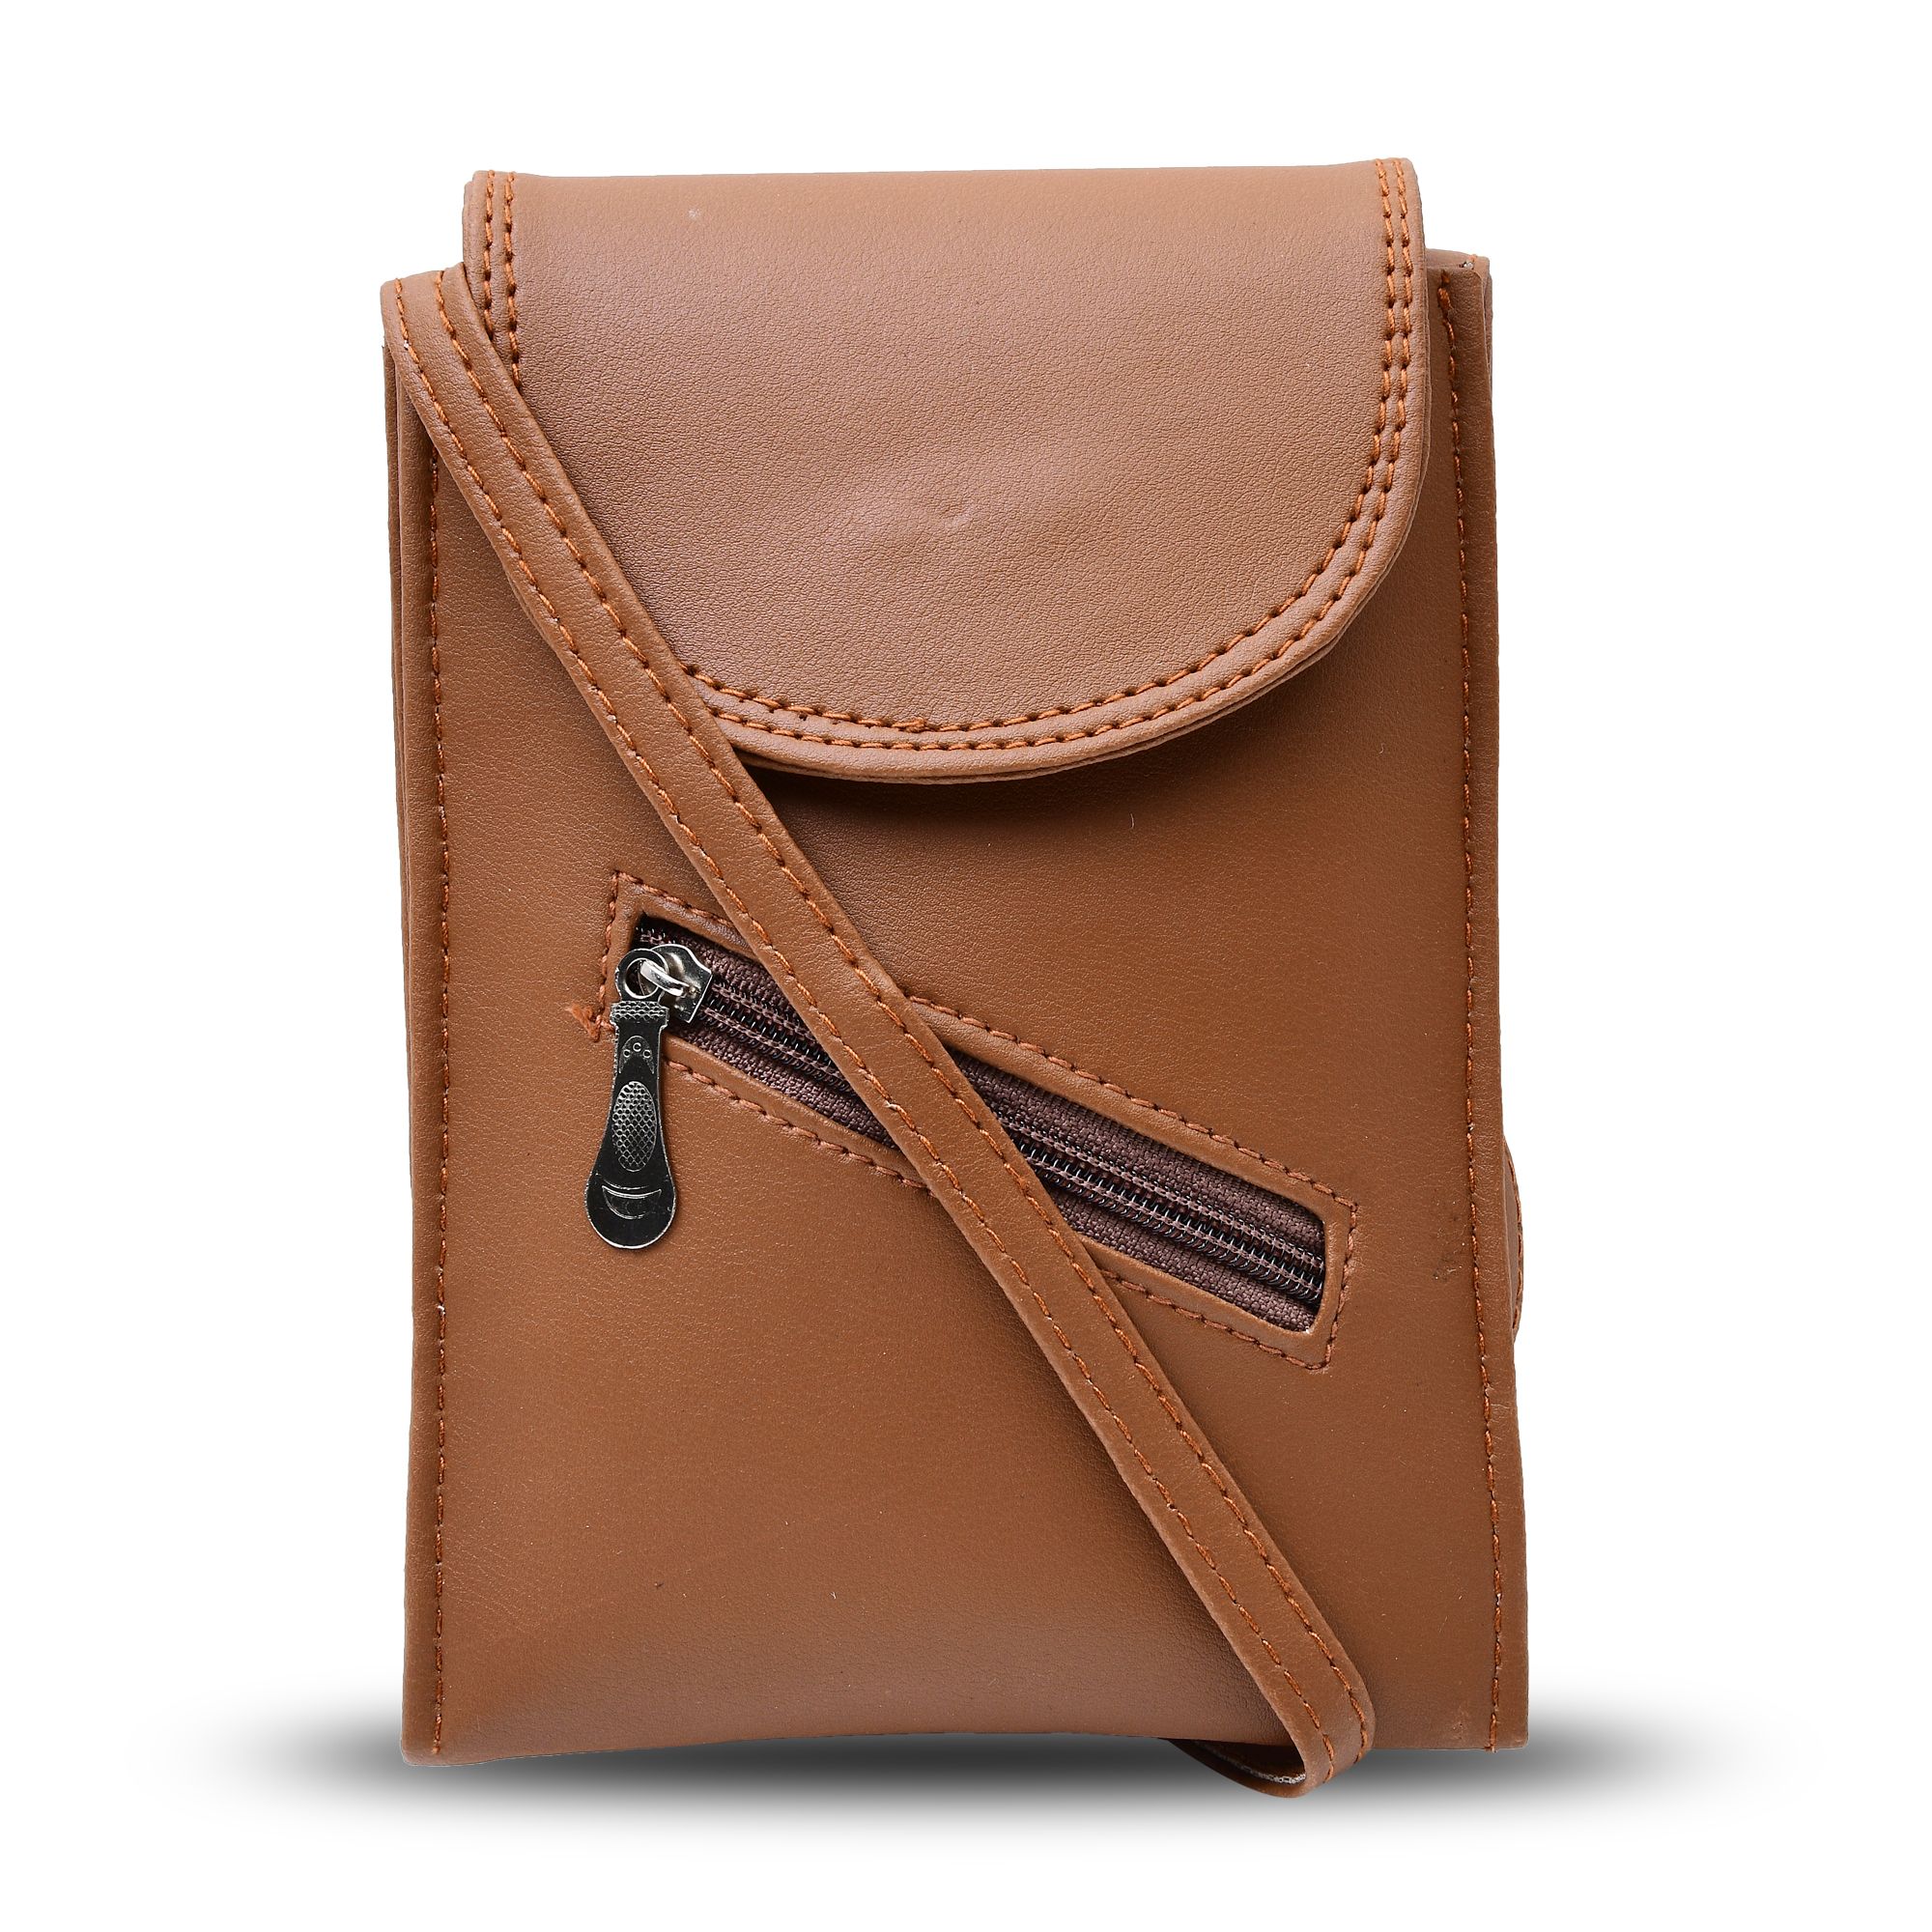 Sling Bag for Women Women's Fashion Casual Messenger Crossbody Bag Handbag  Tote | eBay